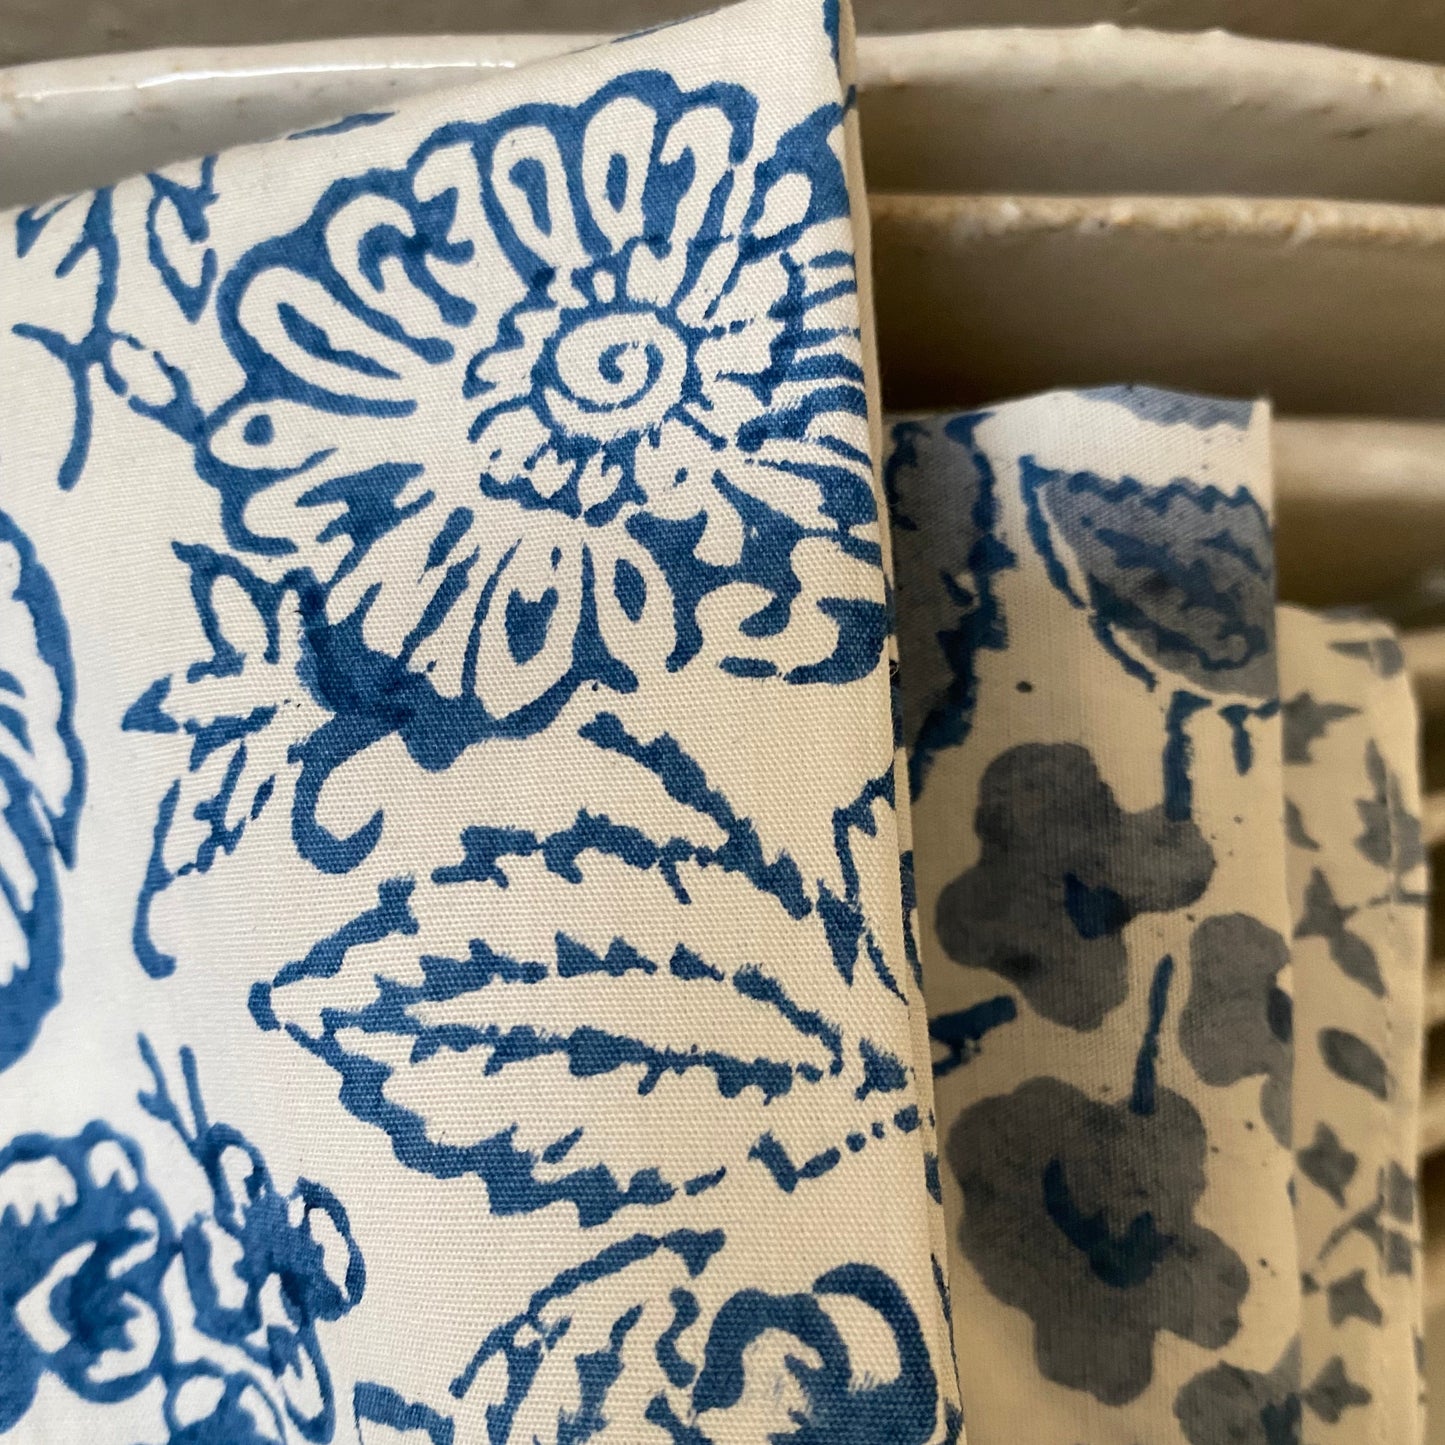 4 x block print floral cotton napkin white and royal blue